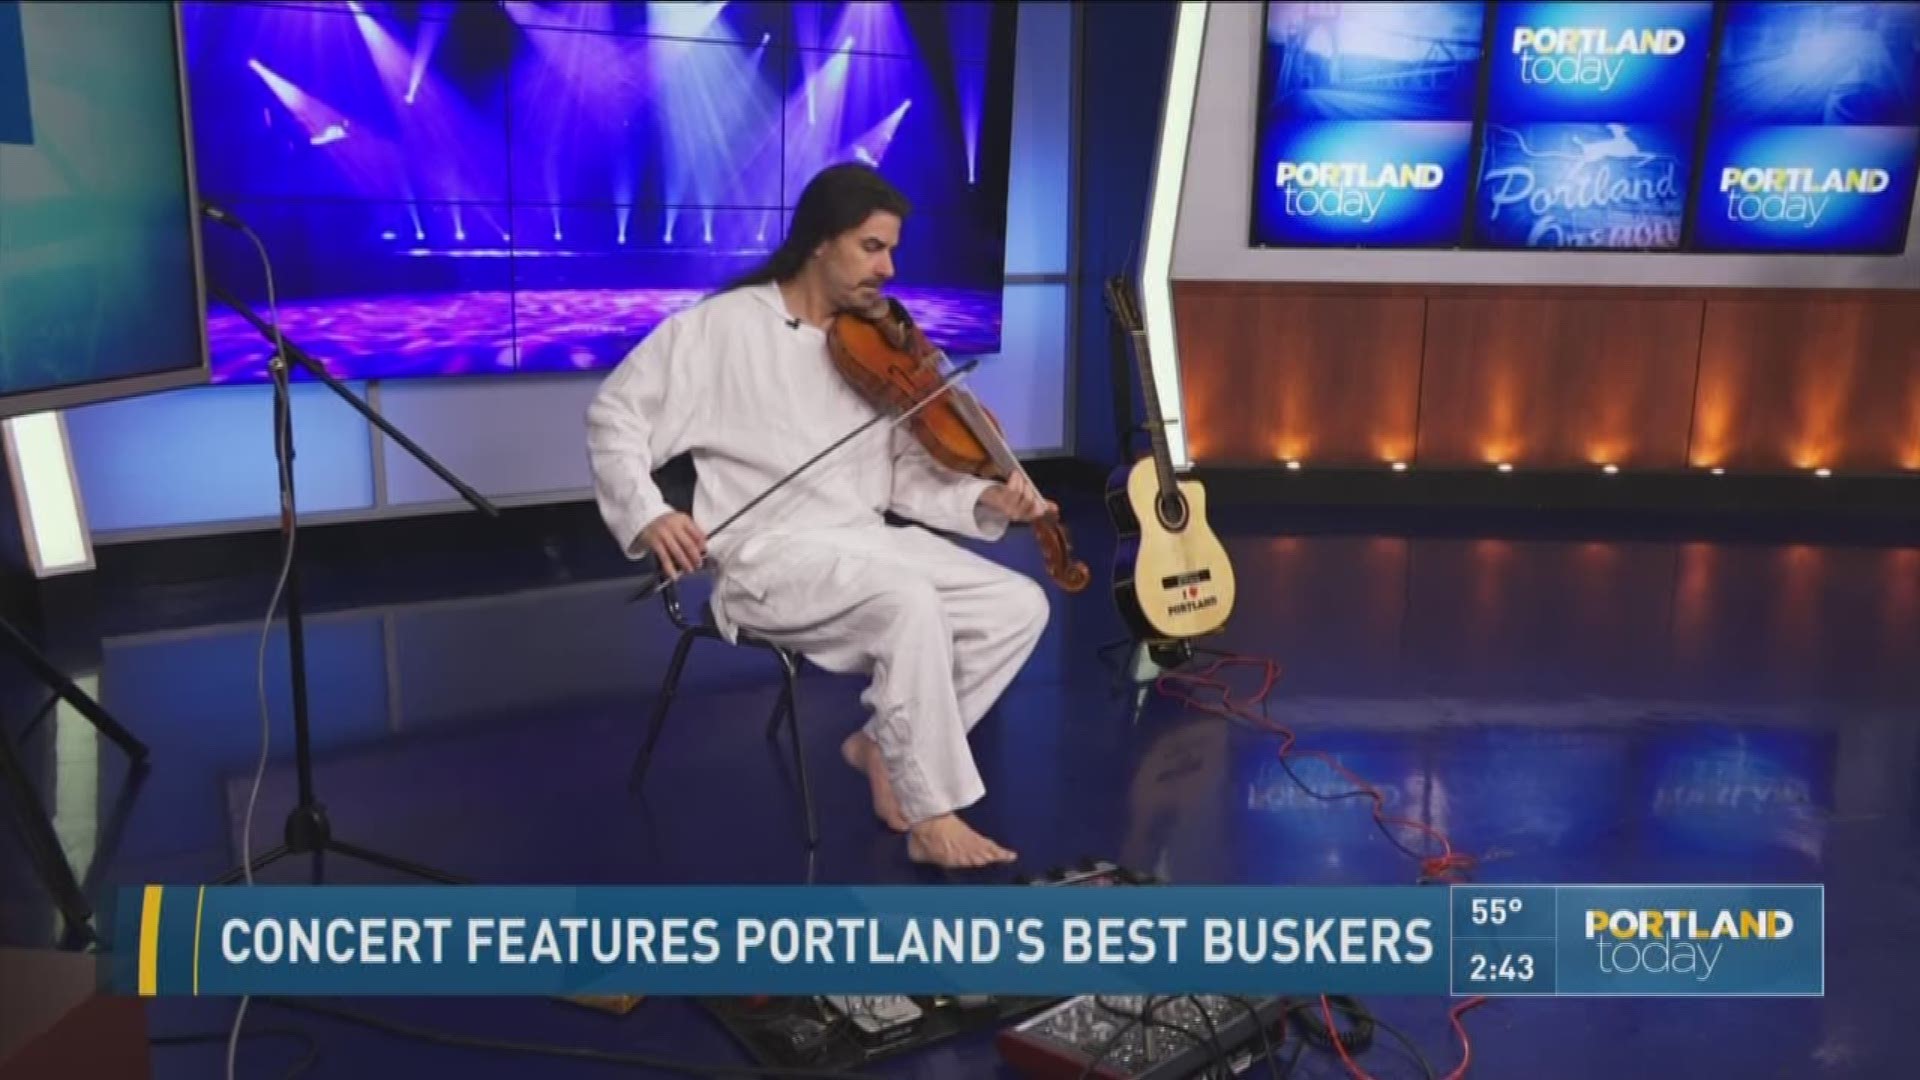 Concert features Portland's best buskers